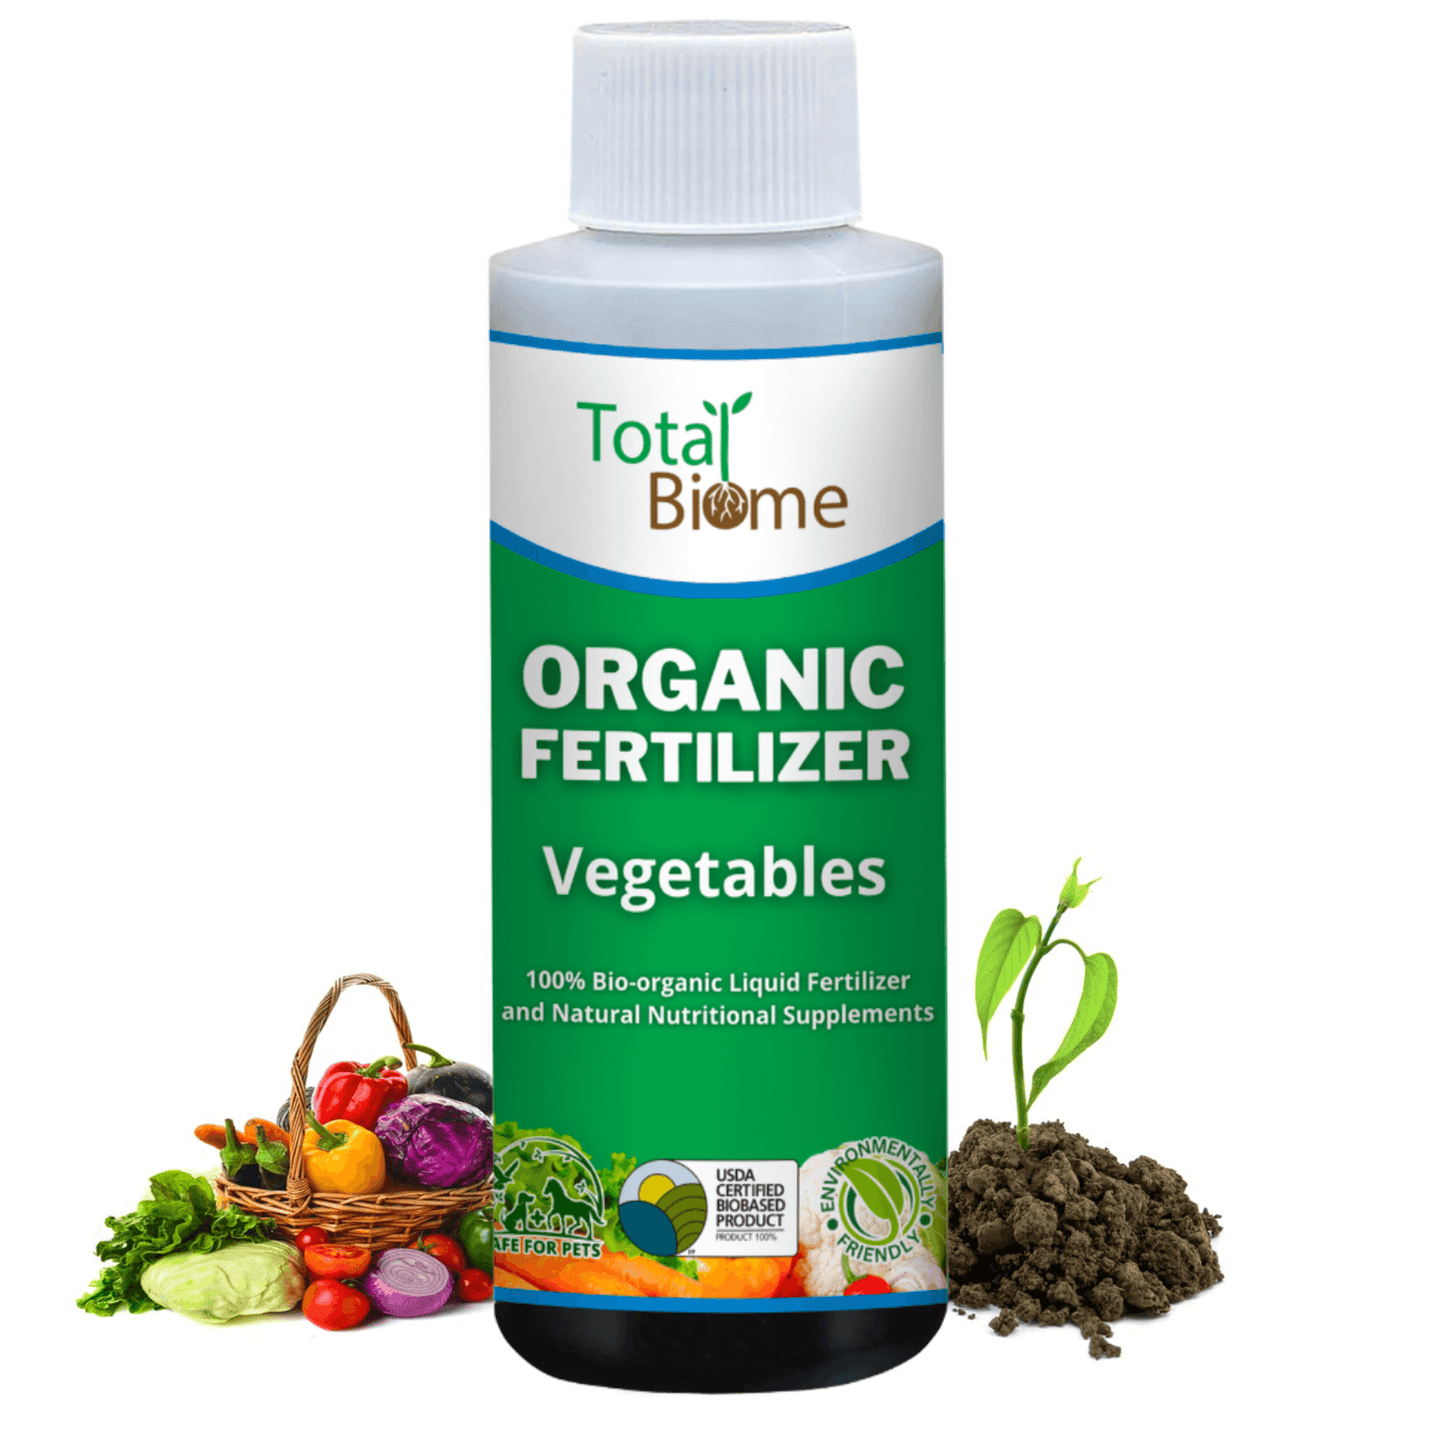 Organic Fertilizer for Vegetables, Liquid Concentrate Plant Food - Total Biome